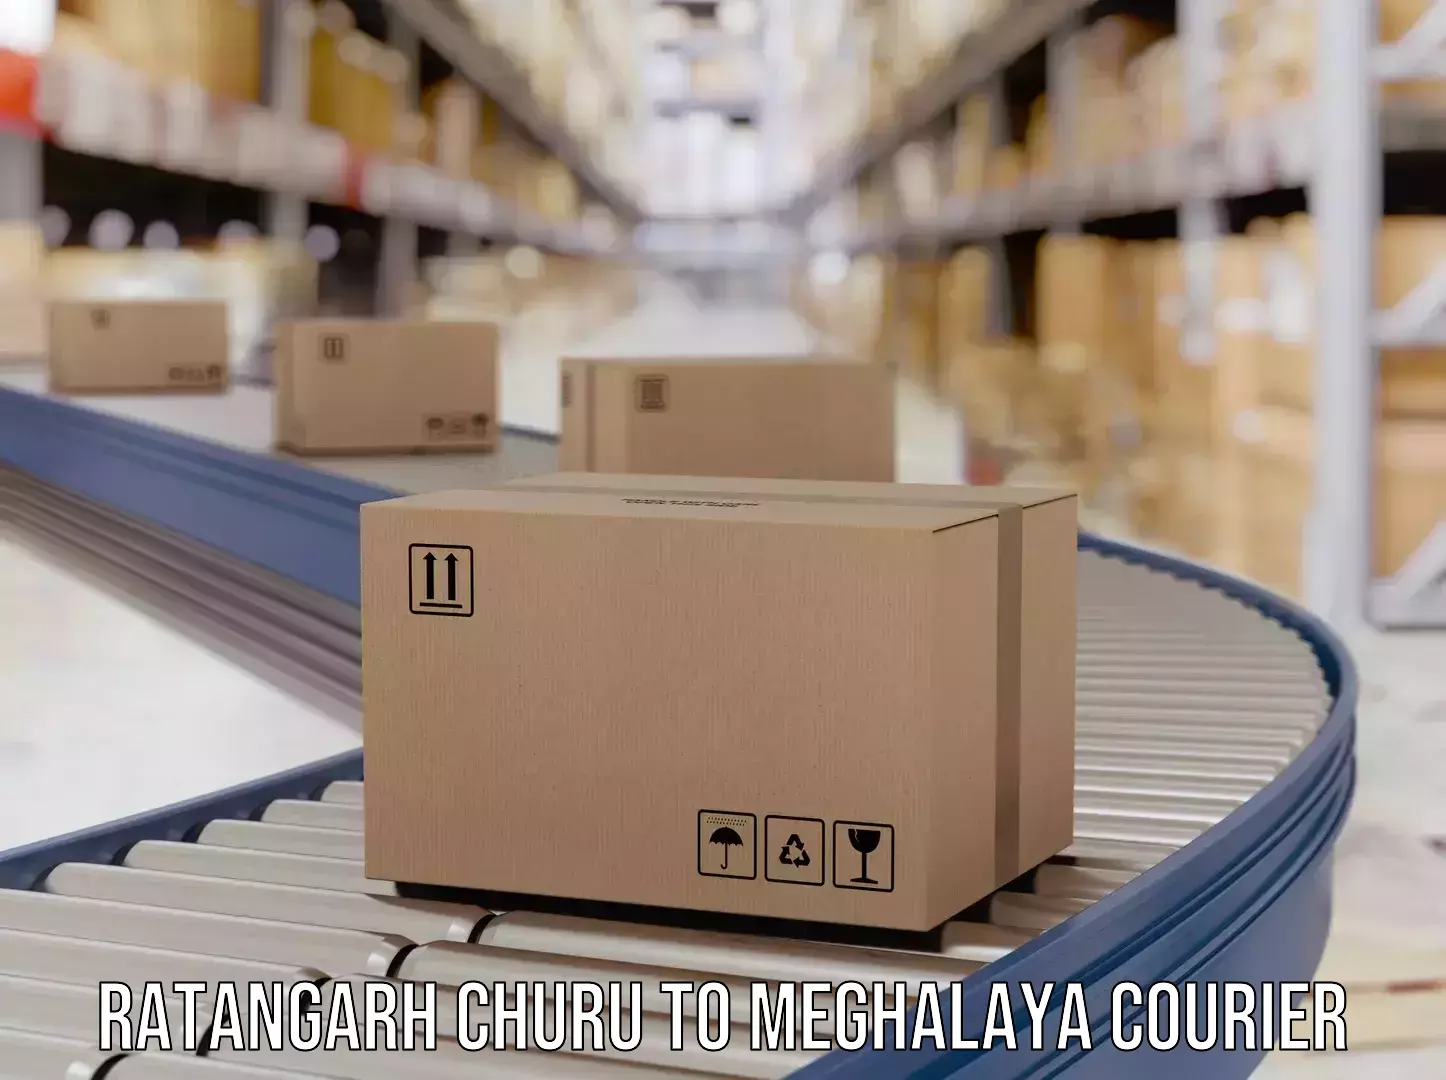 Speedy delivery service Ratangarh Churu to Meghalaya